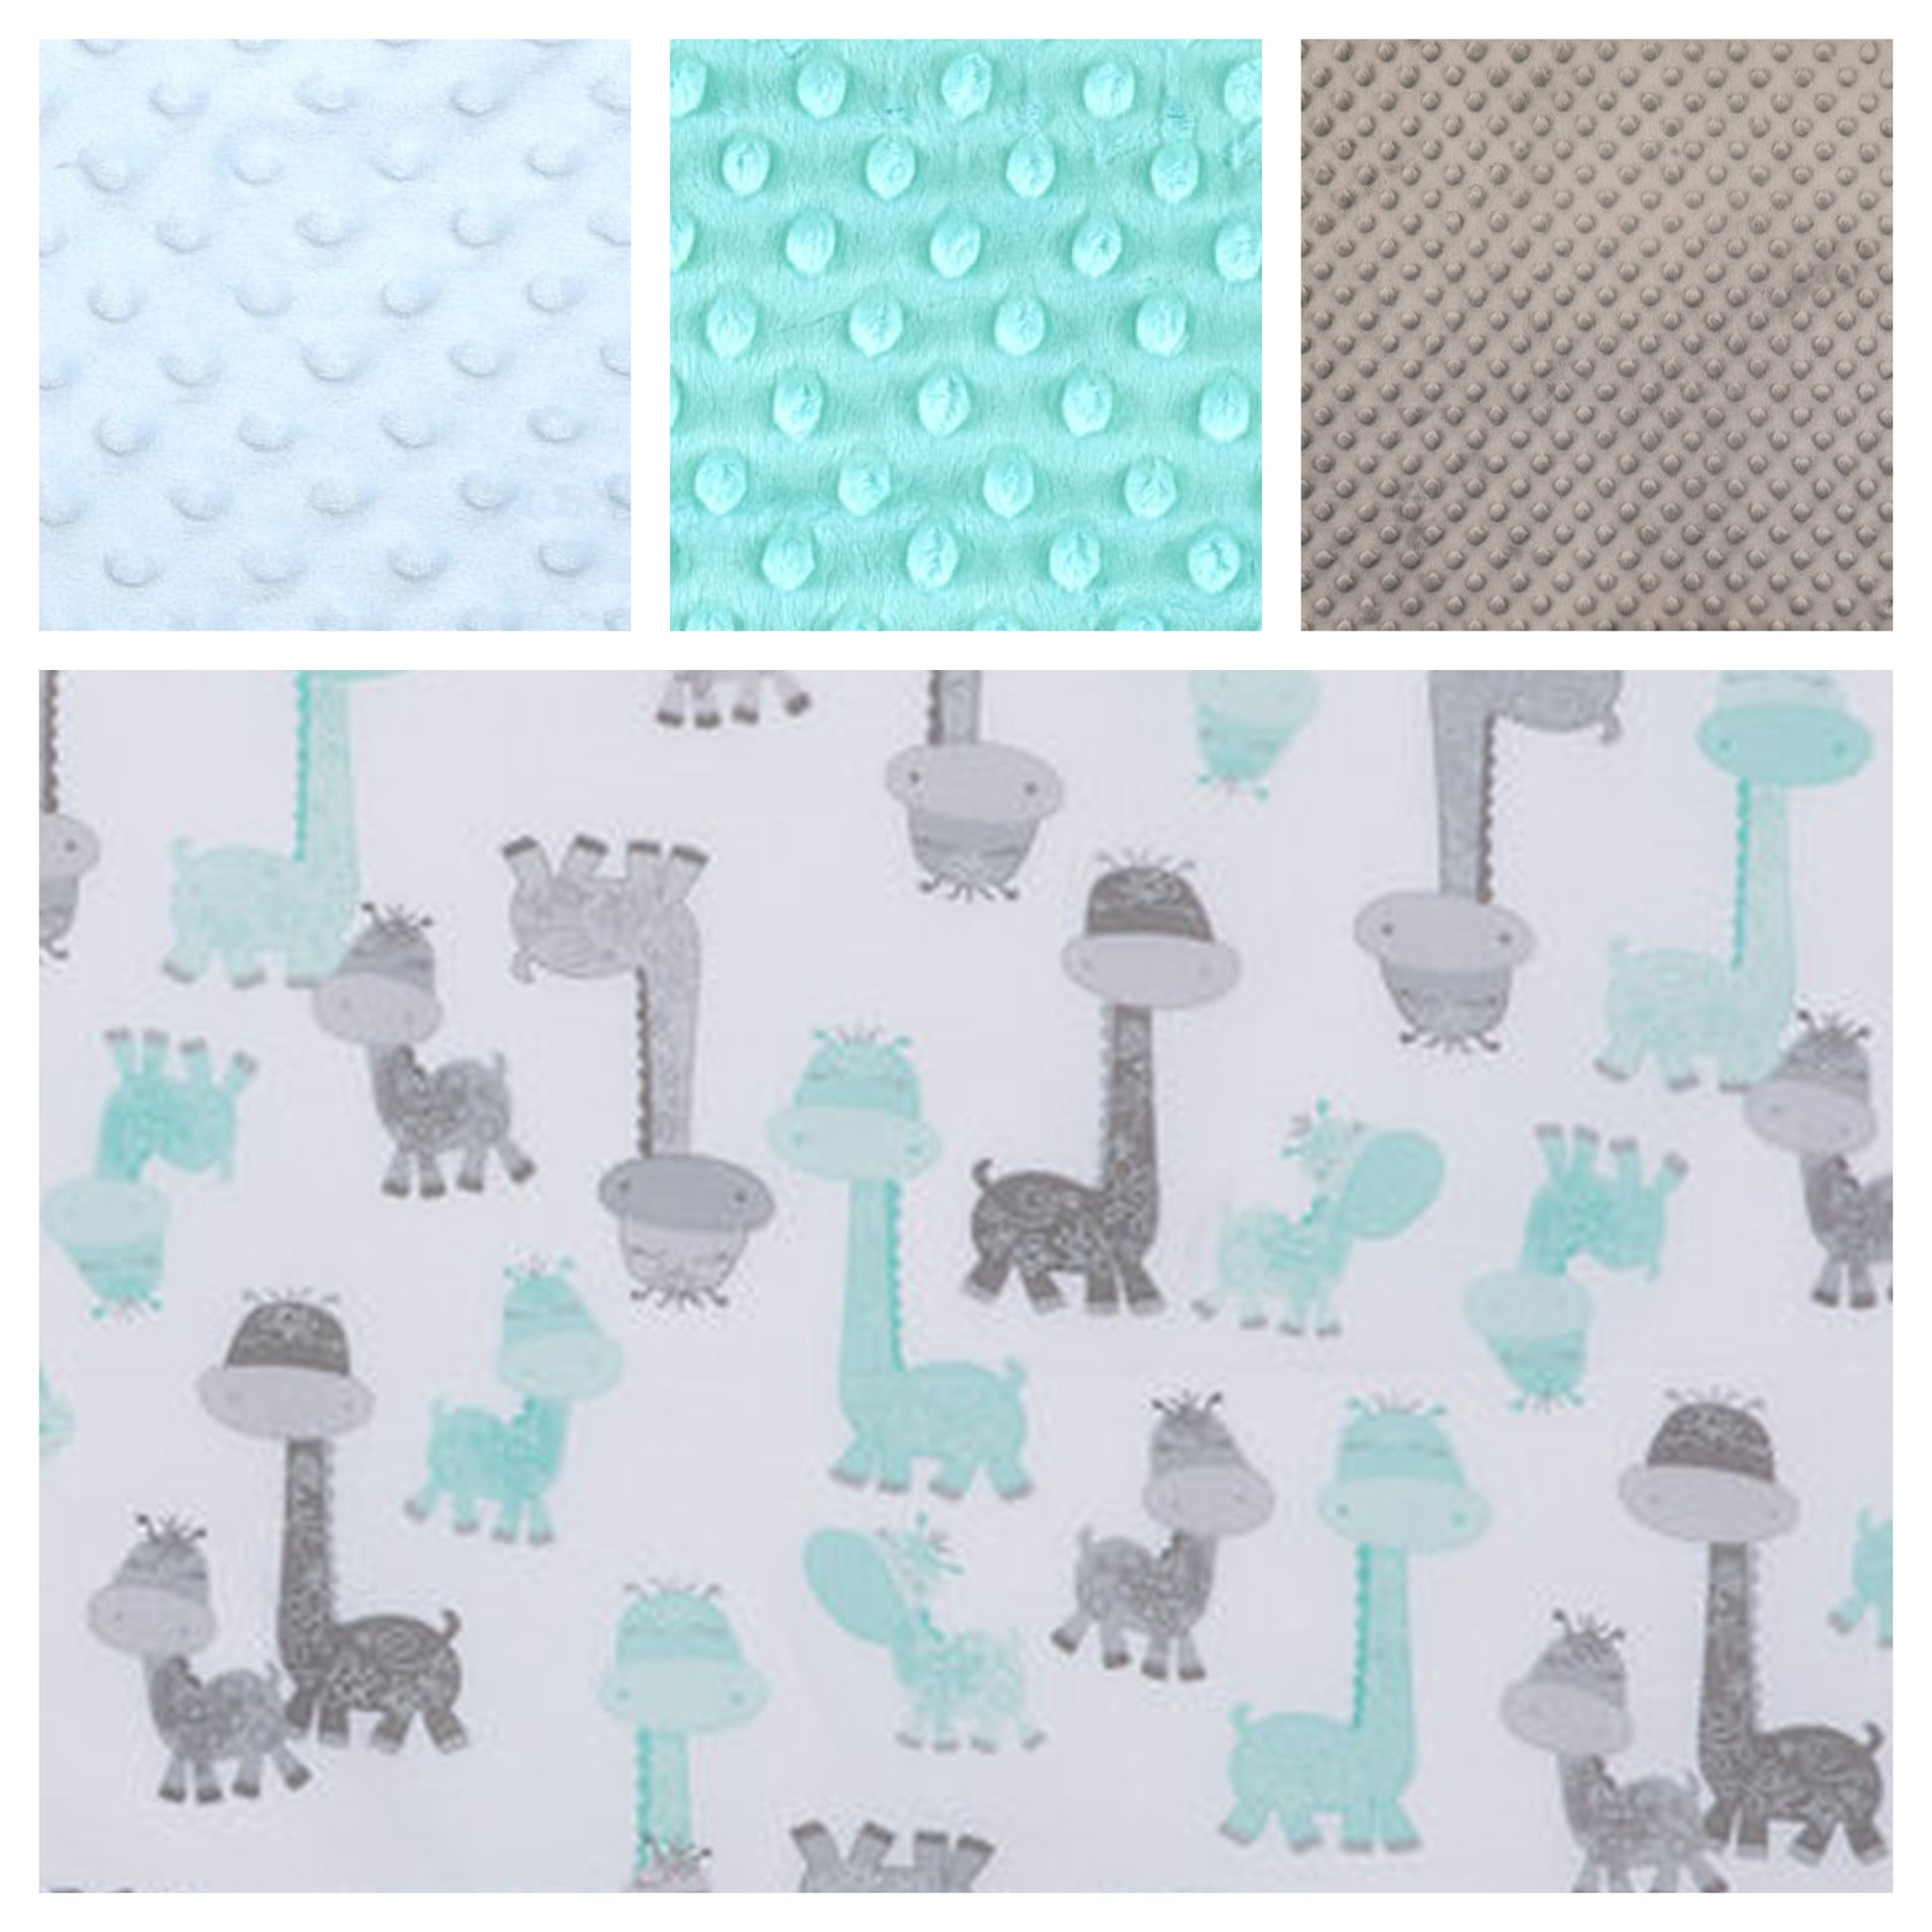 aqua & gray giraffe fabric for car seat strap covers minky options light blue, aqua, gray